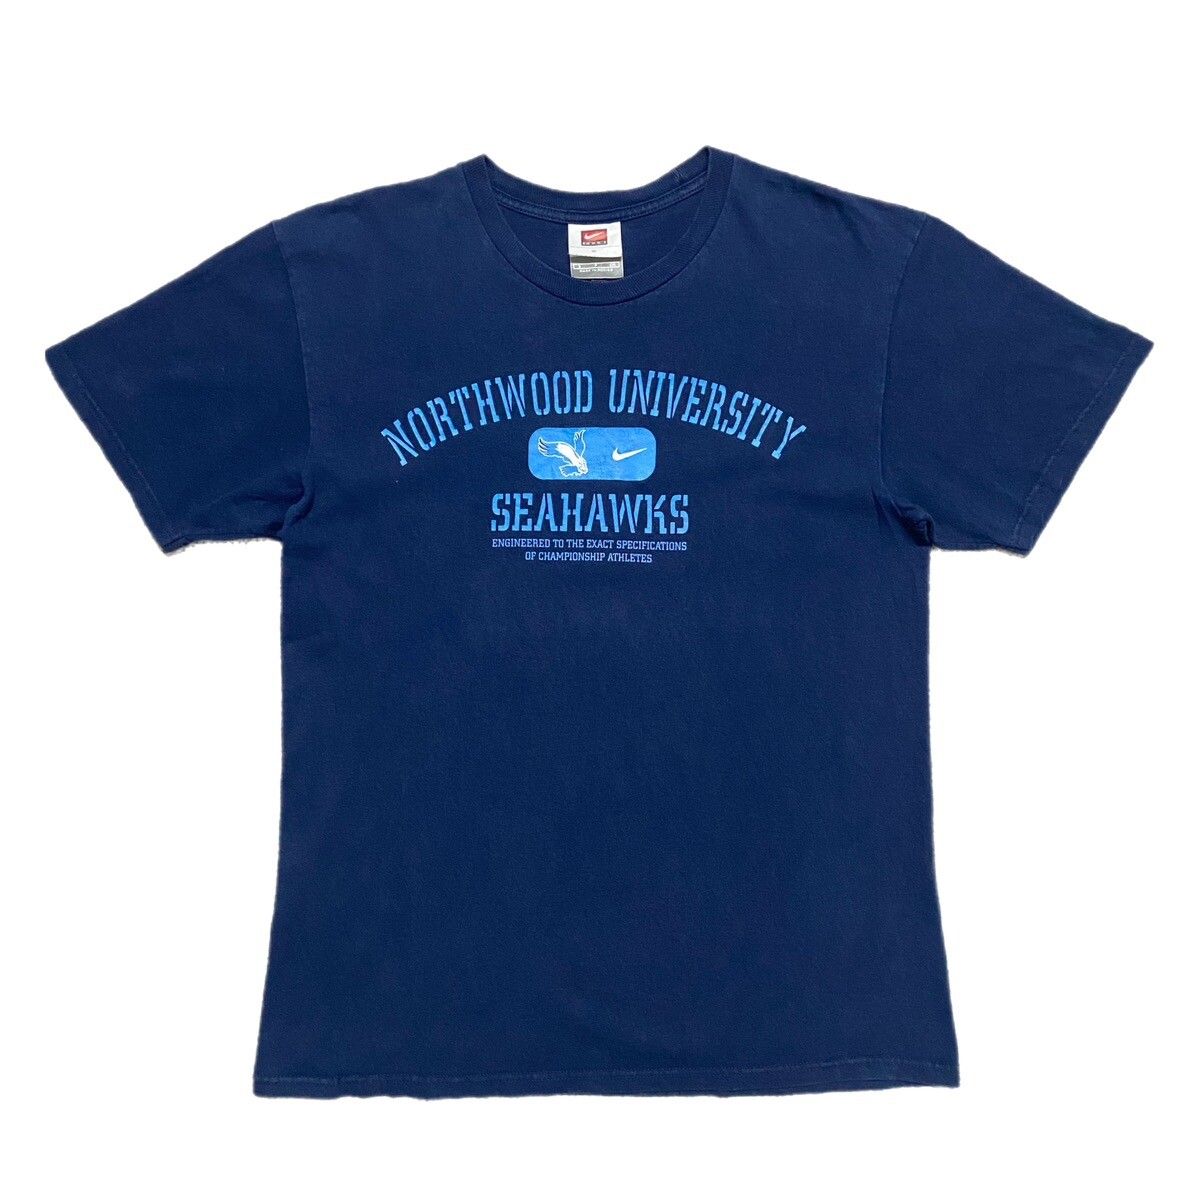 Nike Northwood University Seahawks Tshirt - 1